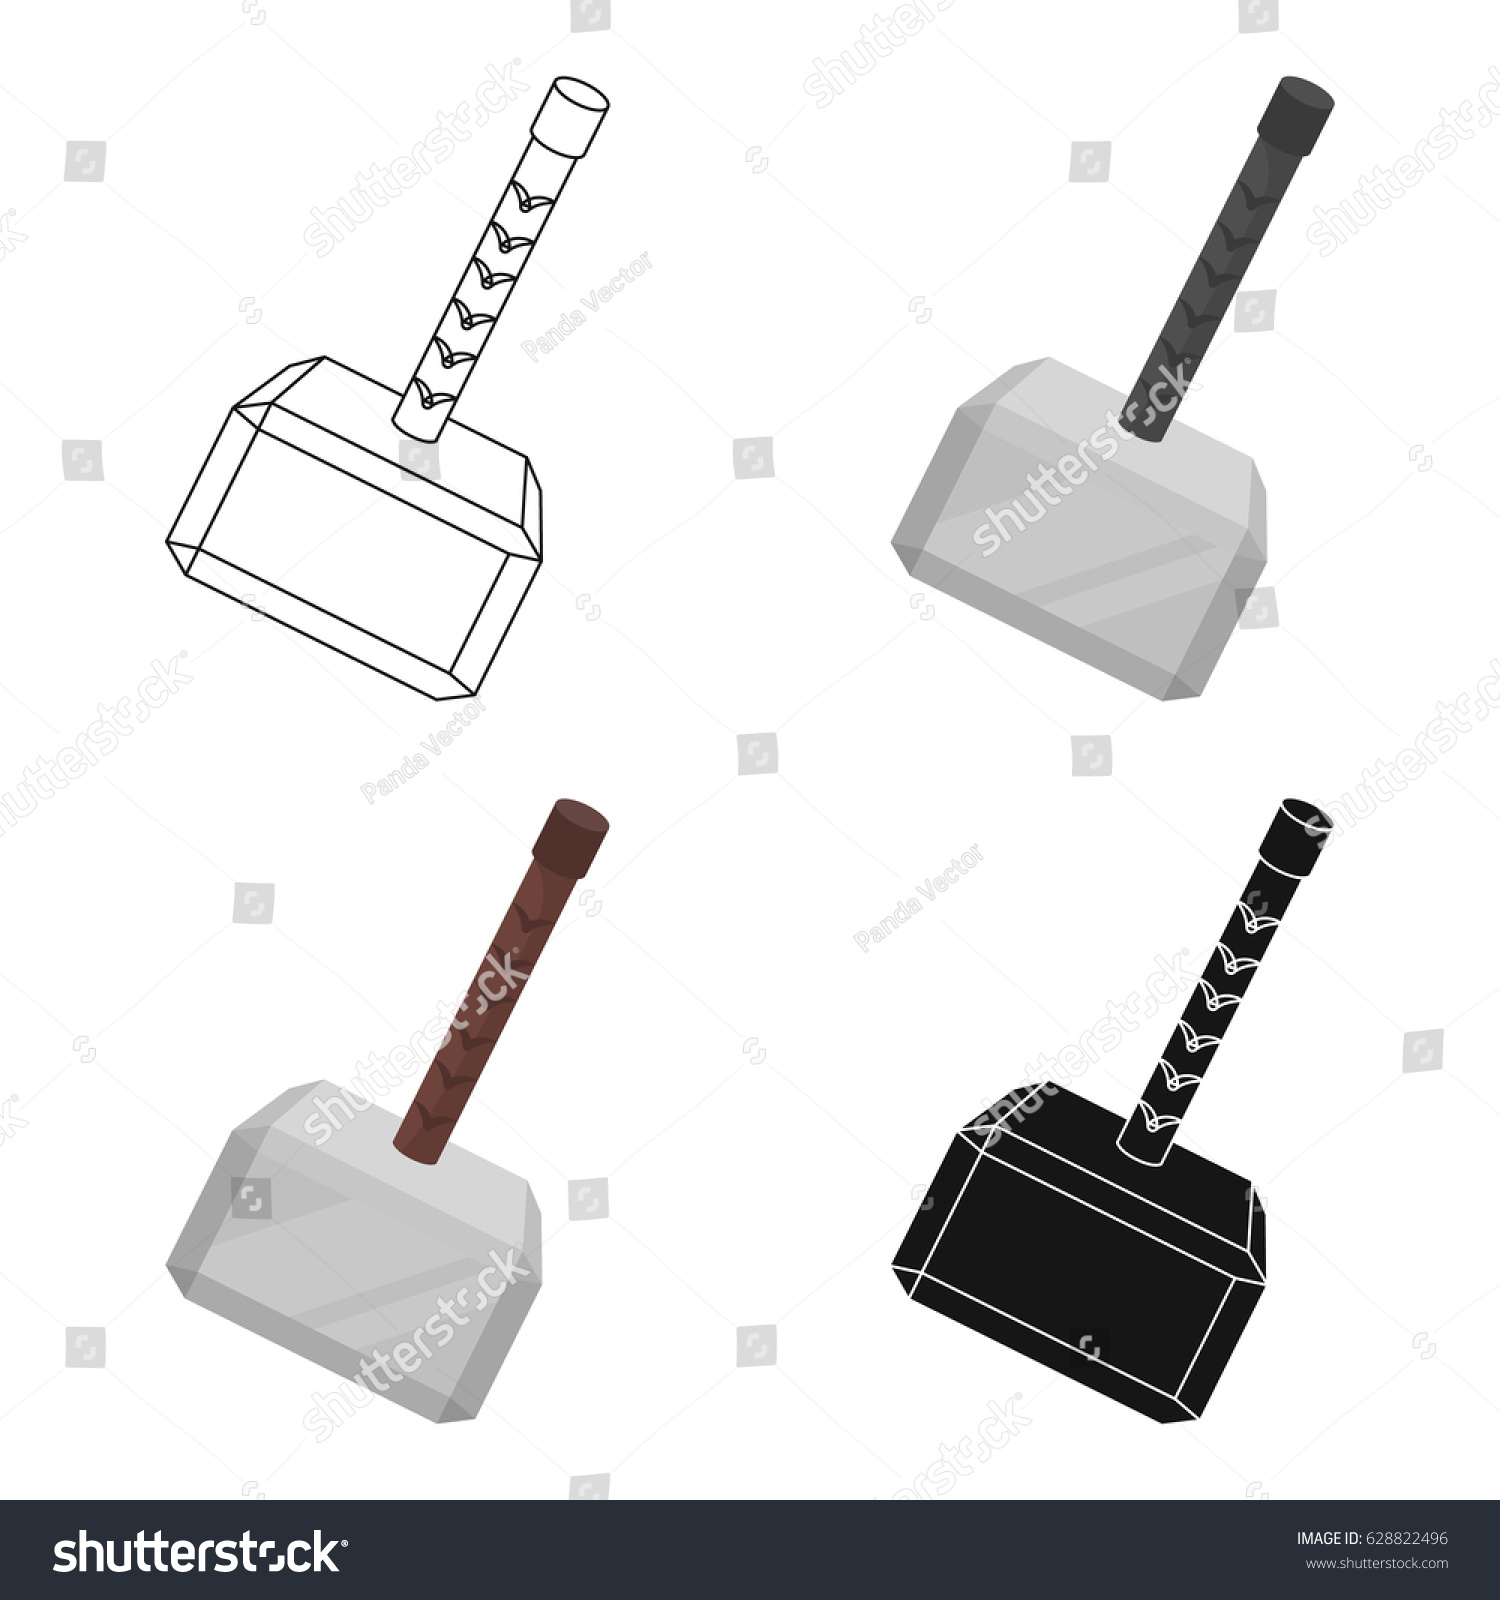 SVG of Viking battle hammer icon in cartoon style isolated on white background. Vikings symbol stock vector illustration. svg